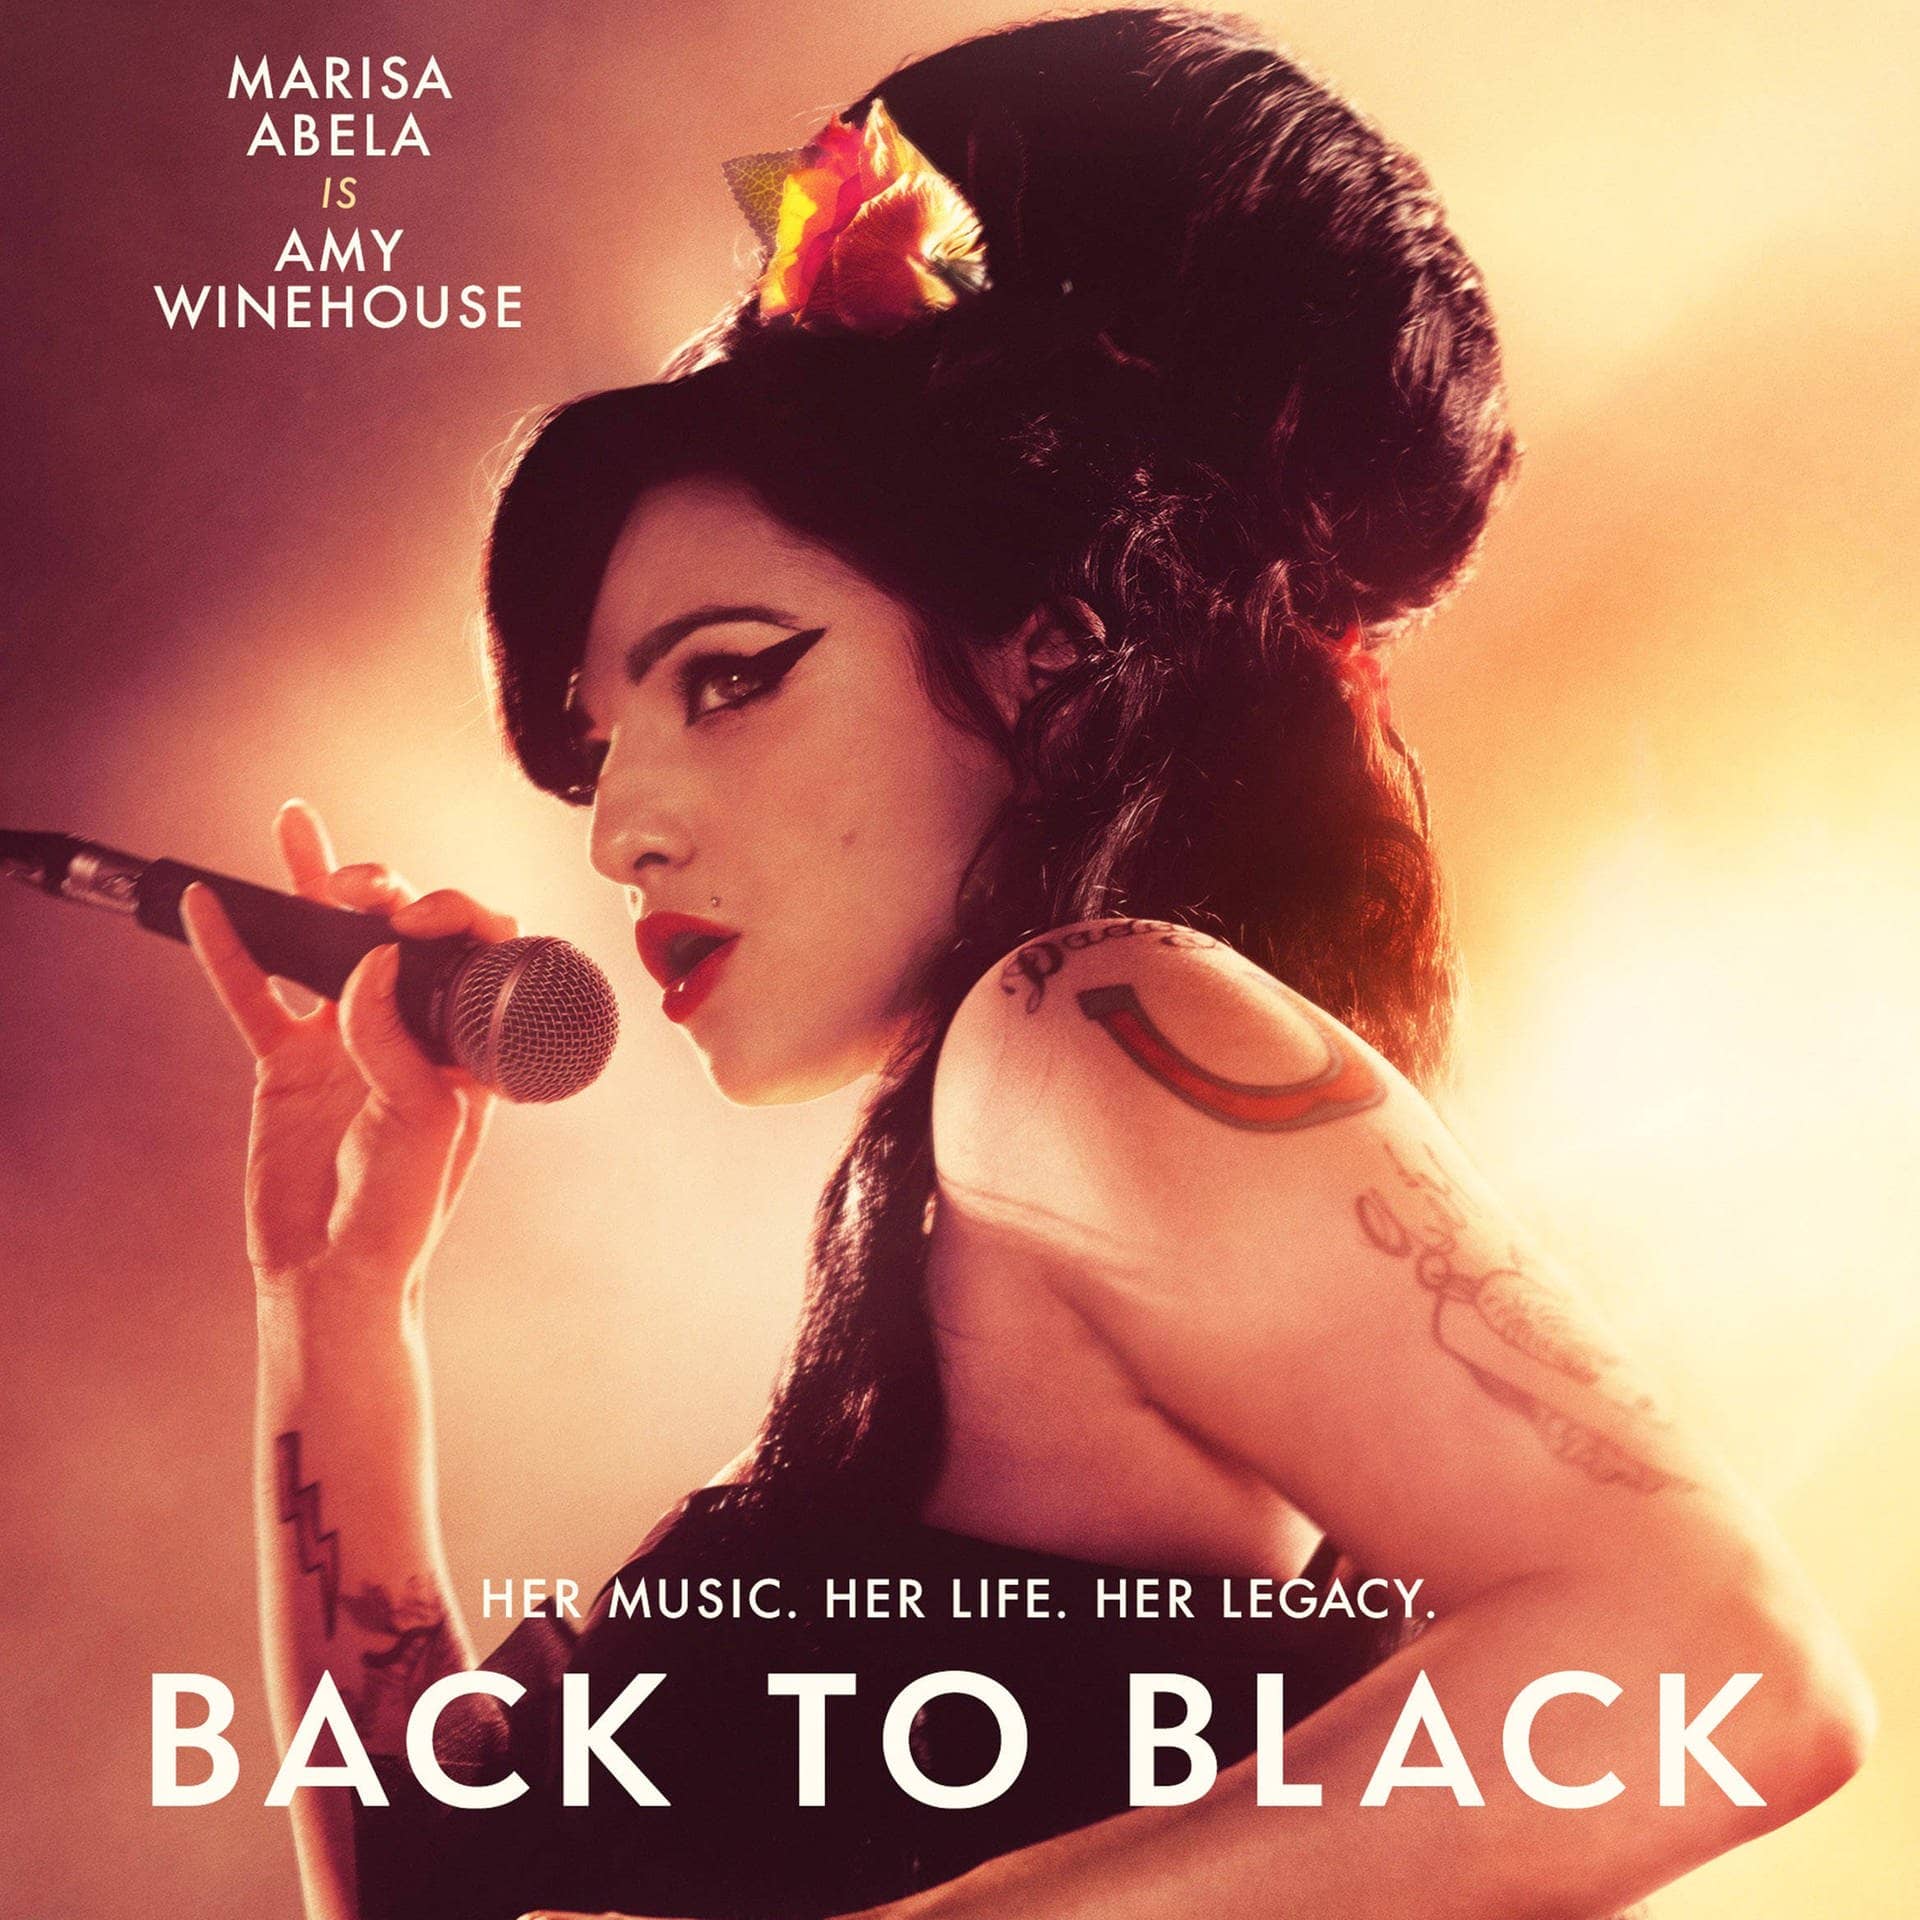 Szene aus dem Film über Amy Winehouse „Back to Black“ mit Marisa Abela (Foto: IMAGO, Landmark Media)